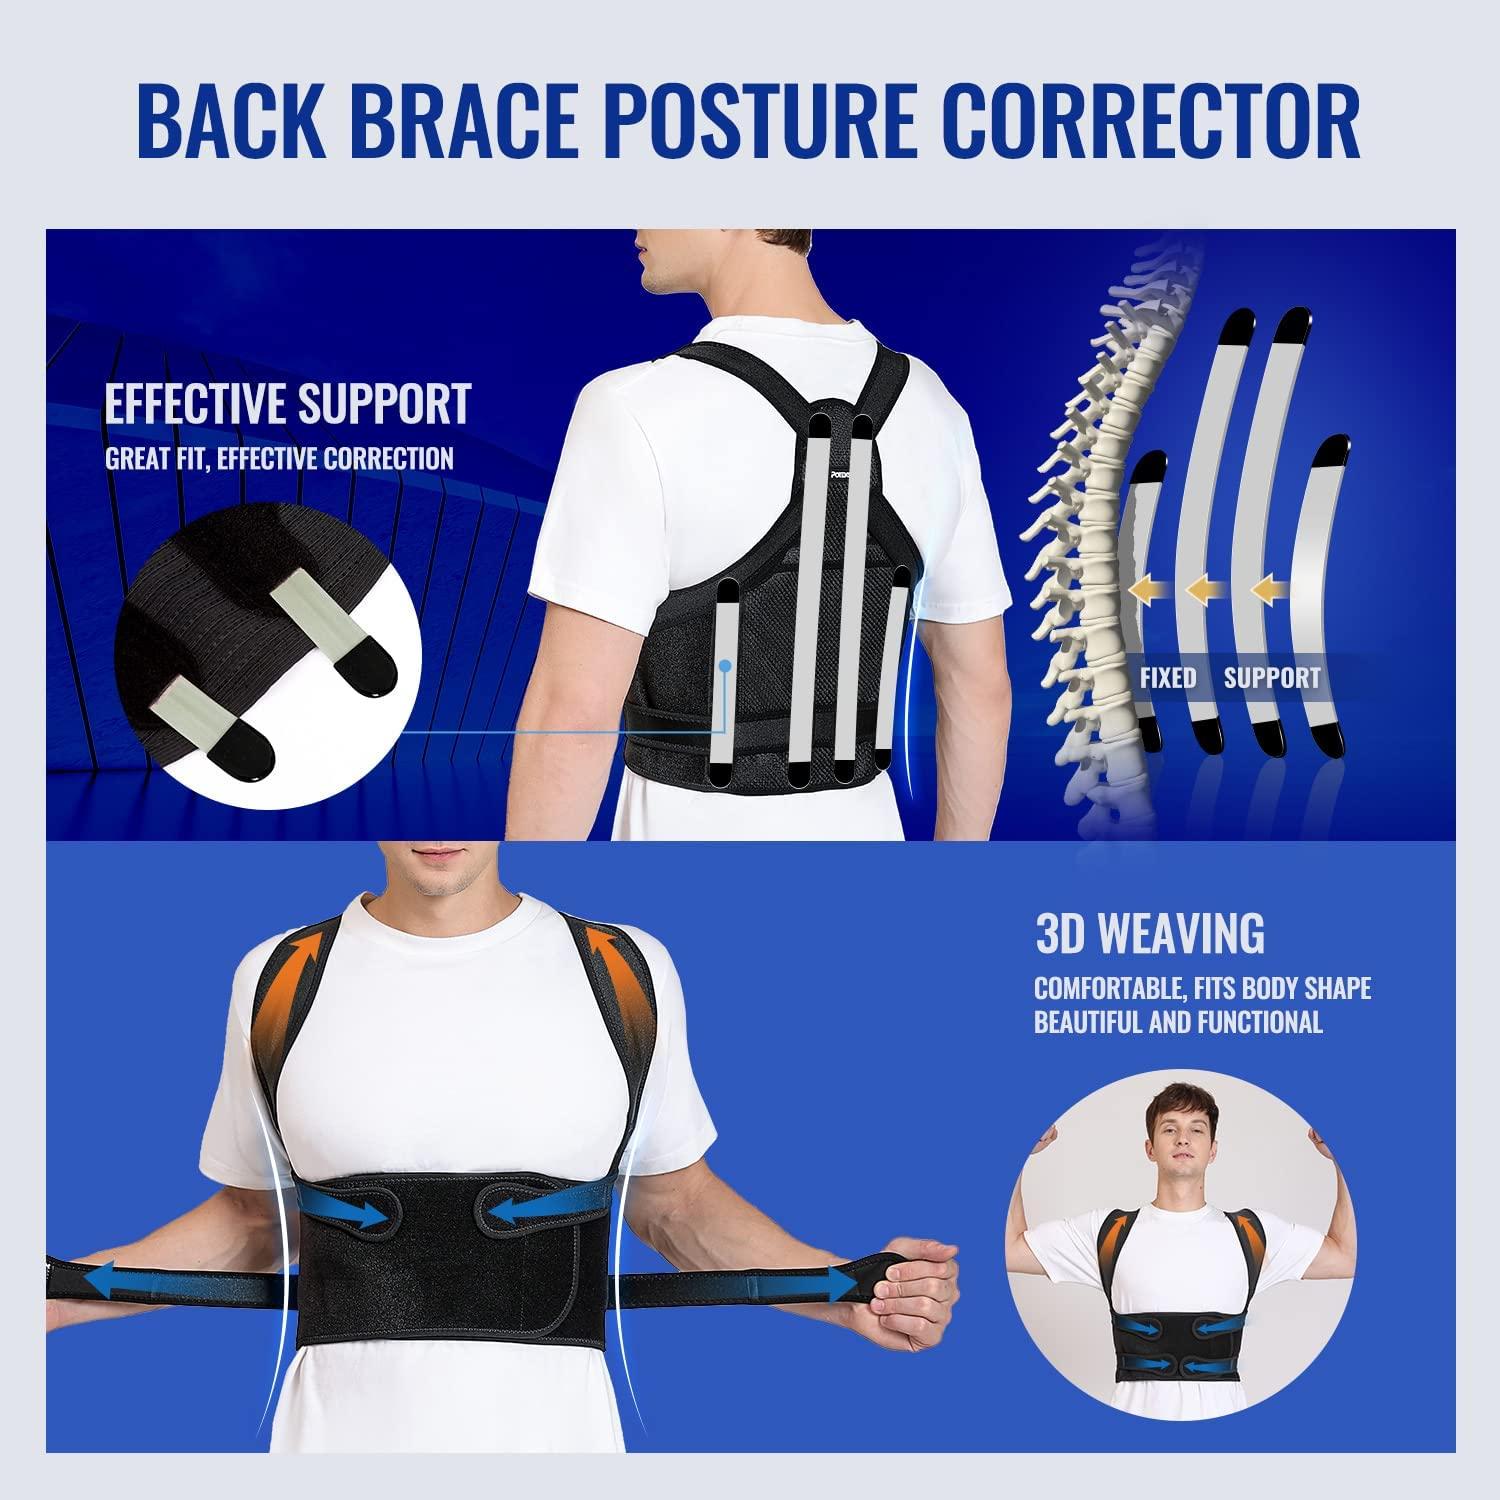 Posture Corrector Full Back Brace for Women & Men - Posture Correction -  Back Corrector - Back Support Straightener - Prevent Scoliosis, Improve